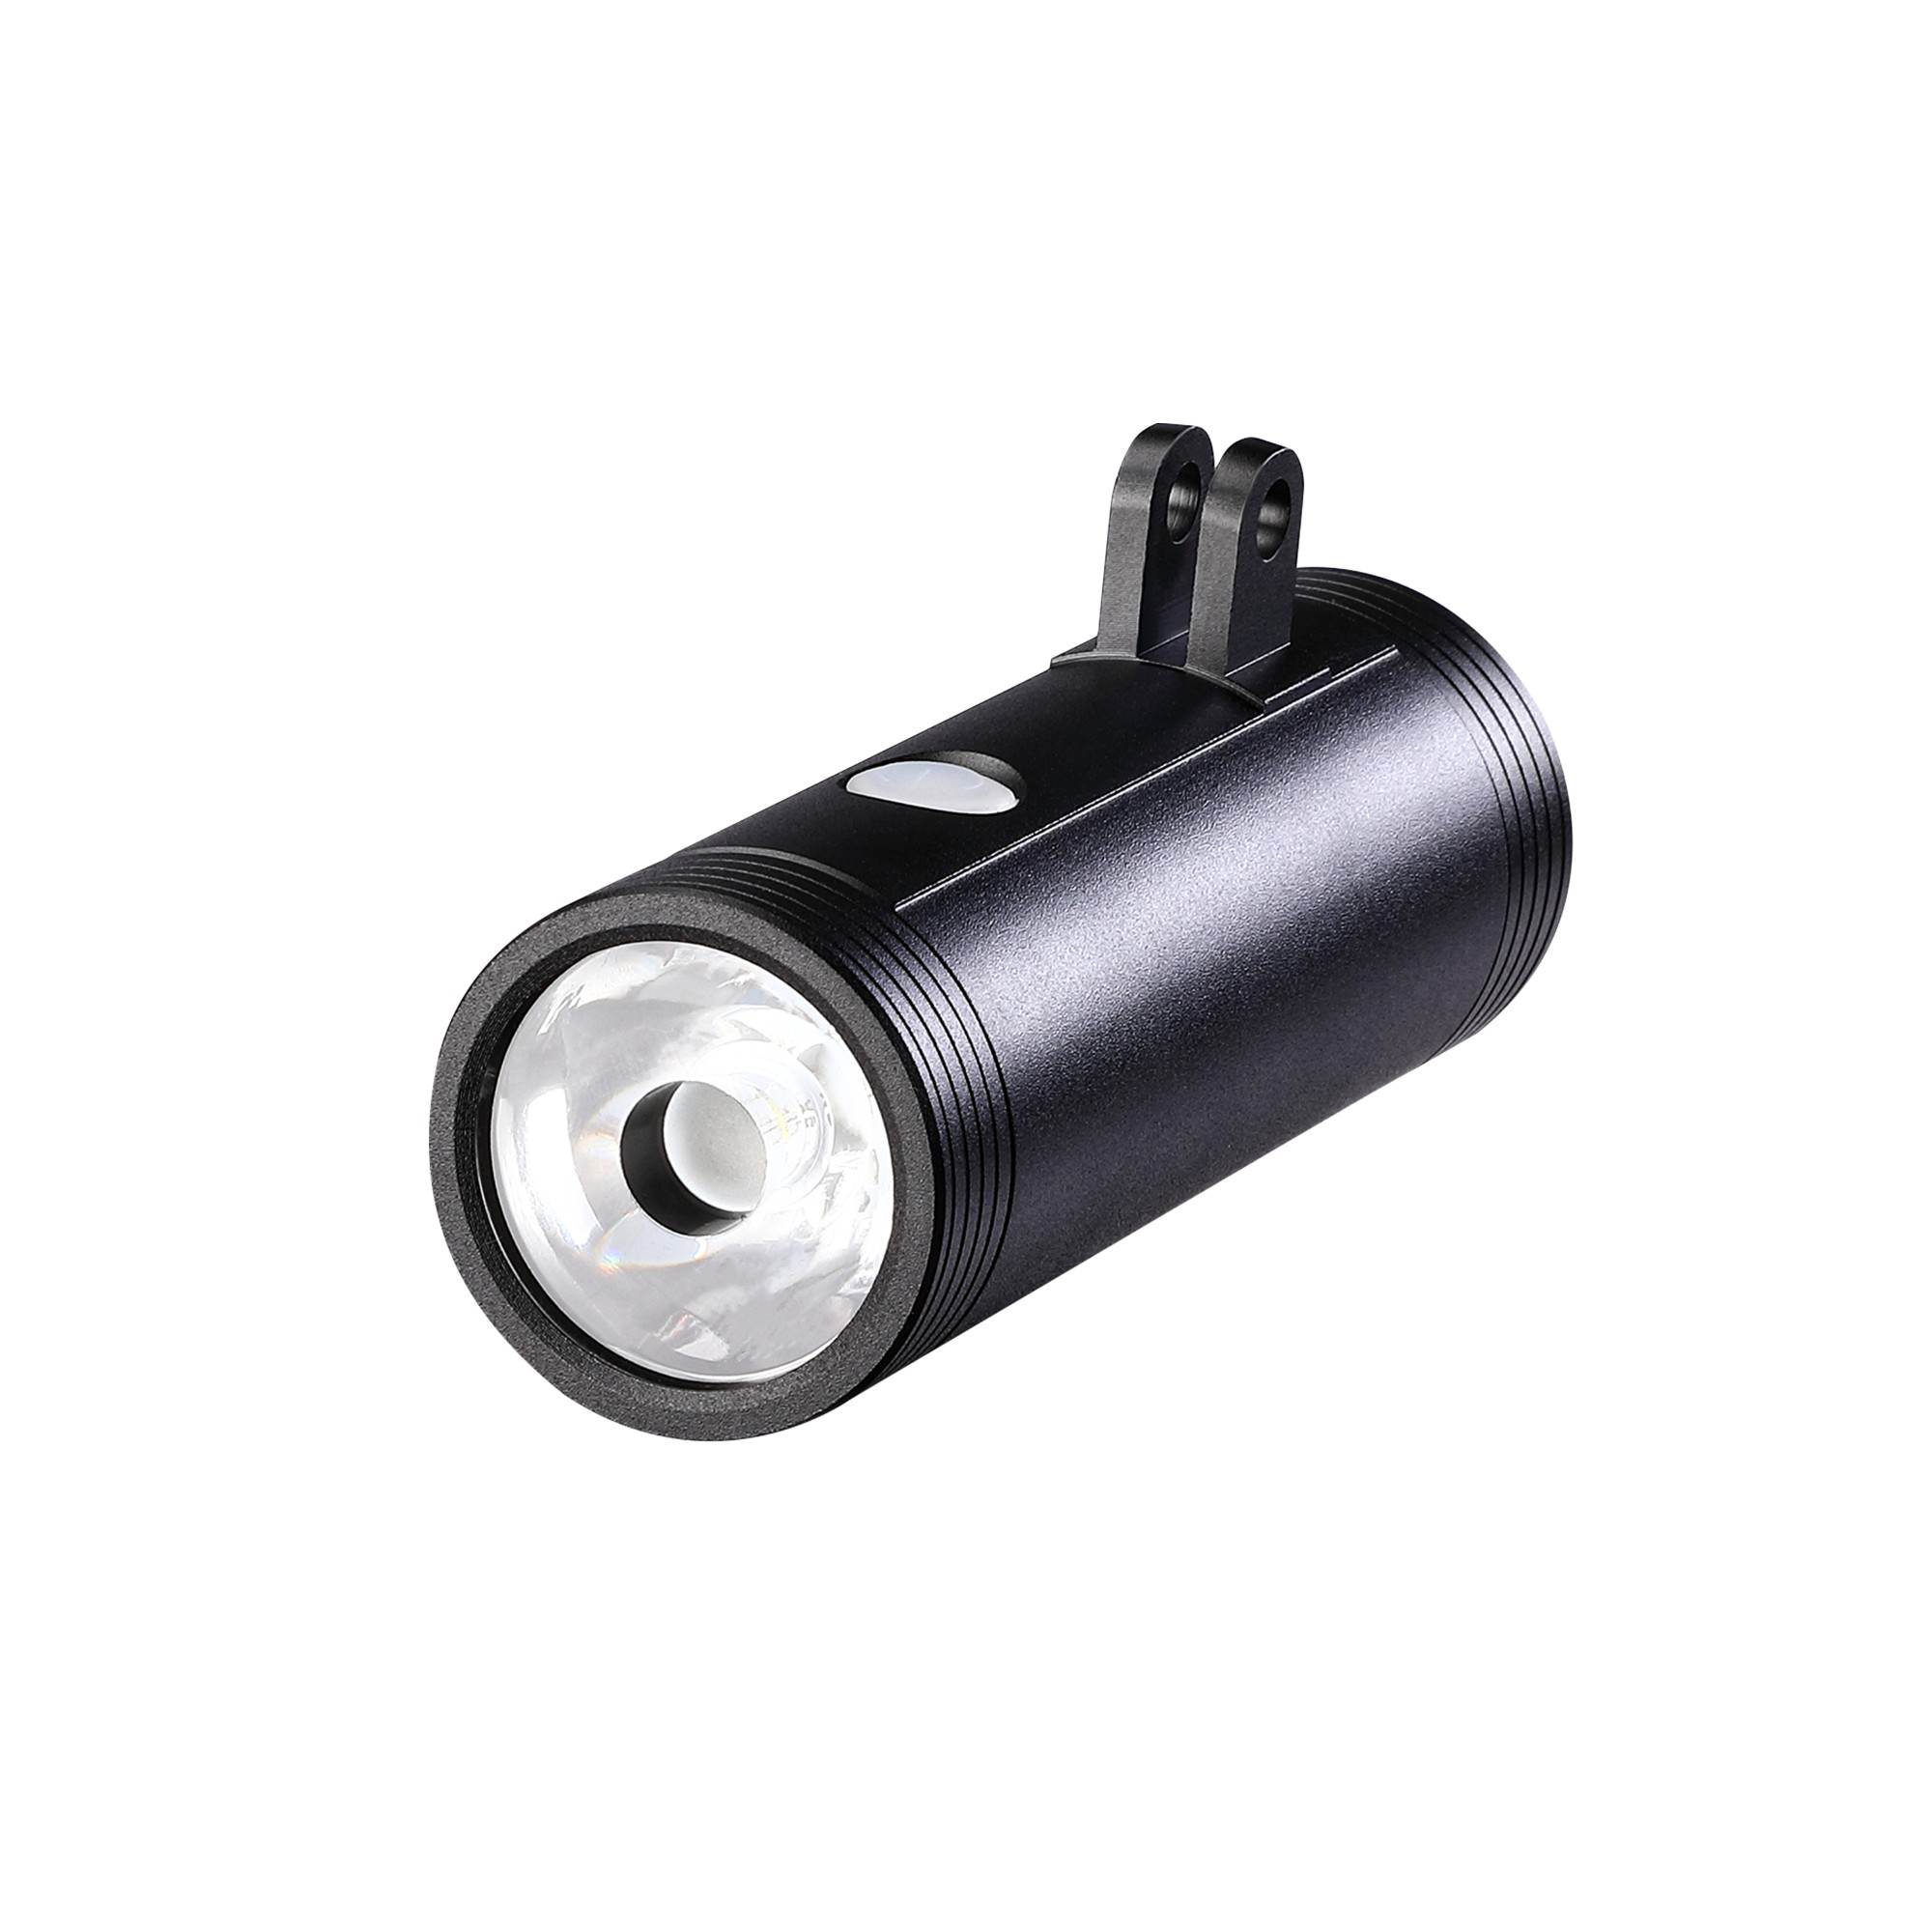 USB rechargeable bike front light BC-FL1633